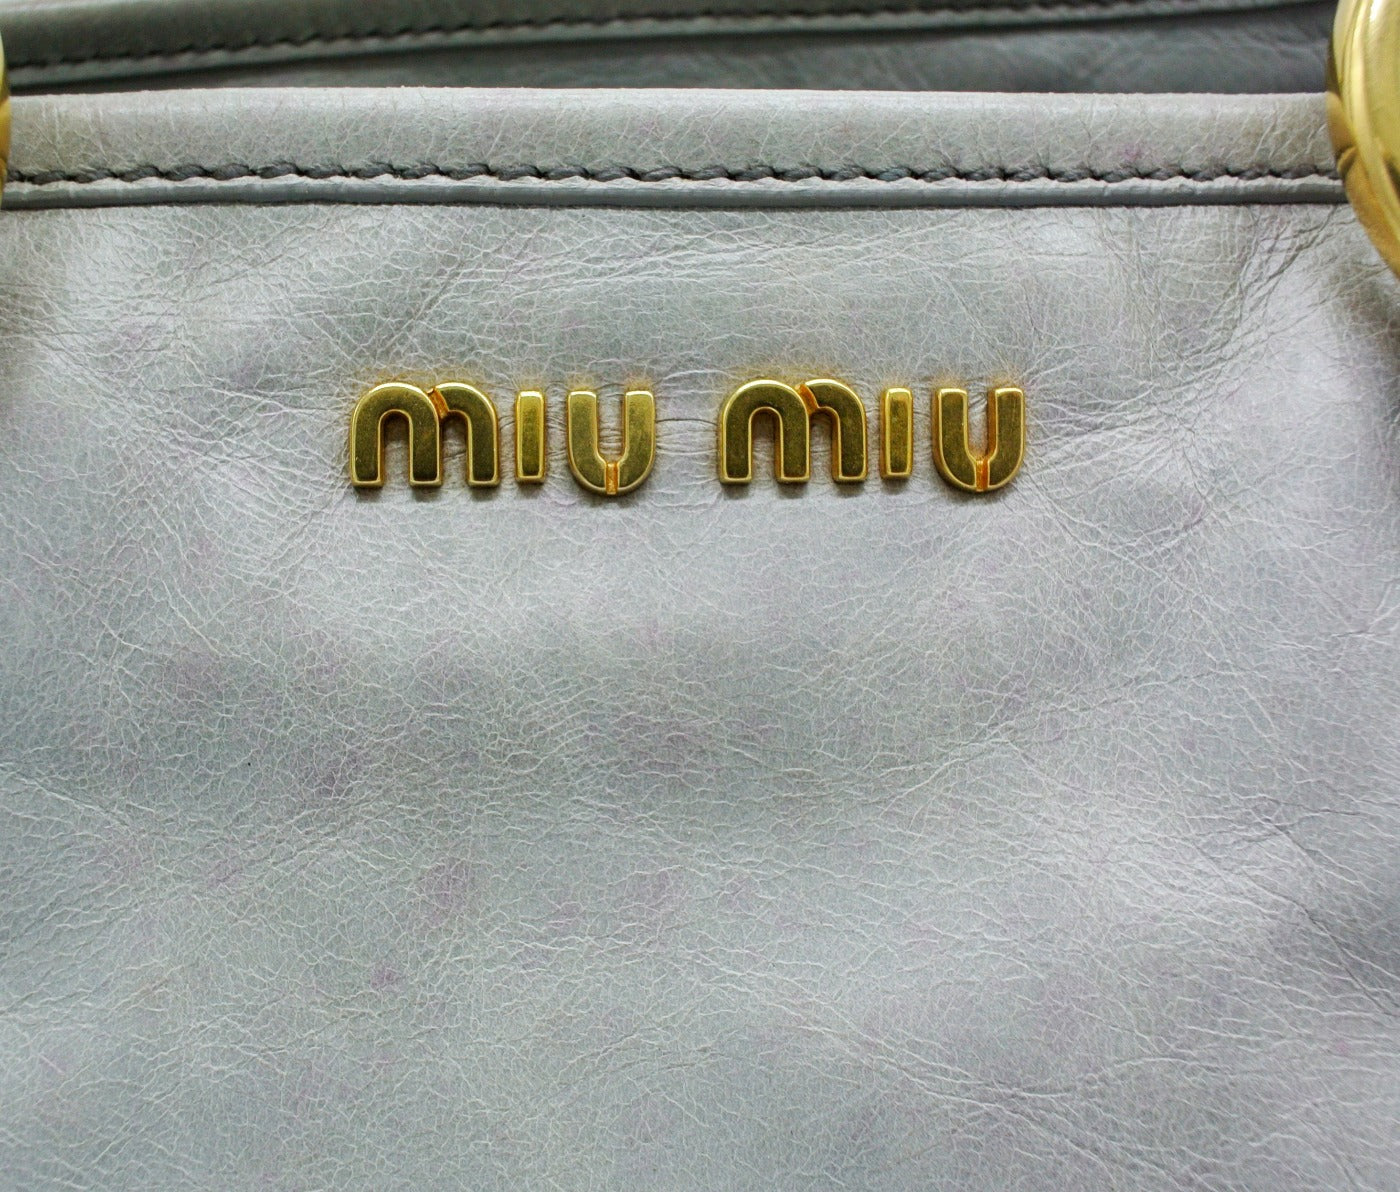 Miu Miu Grey 2Way Handbag Bag Miu Miu